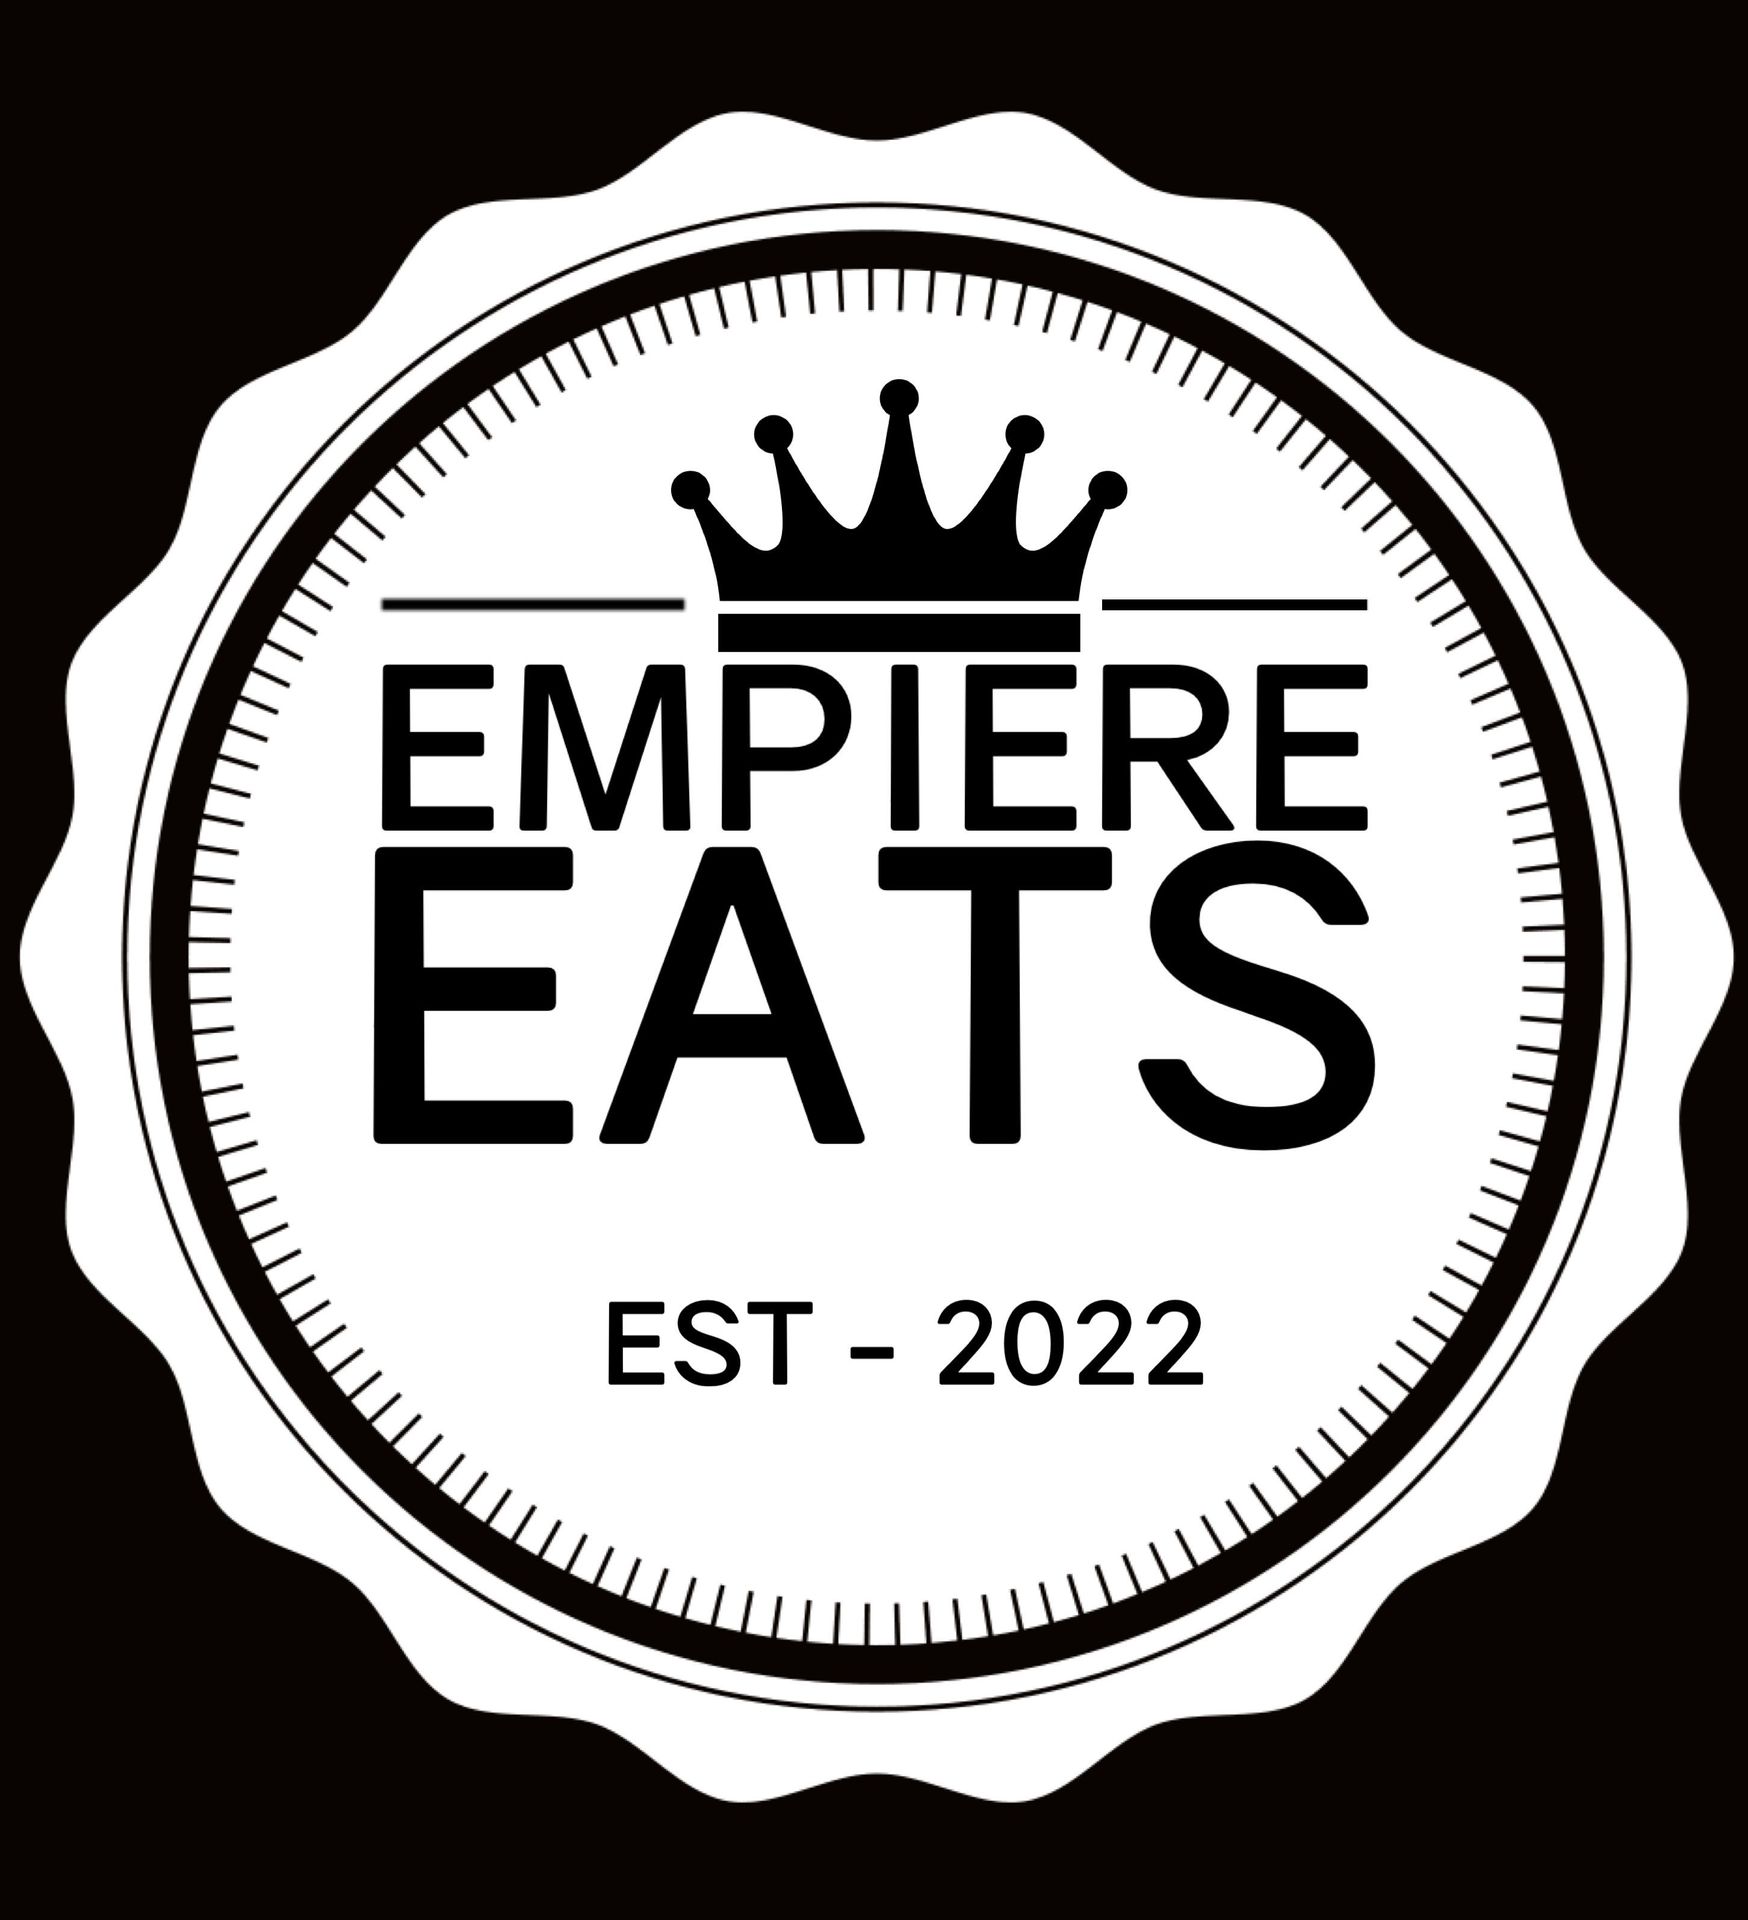 Empiere Eats Gourmet Pies